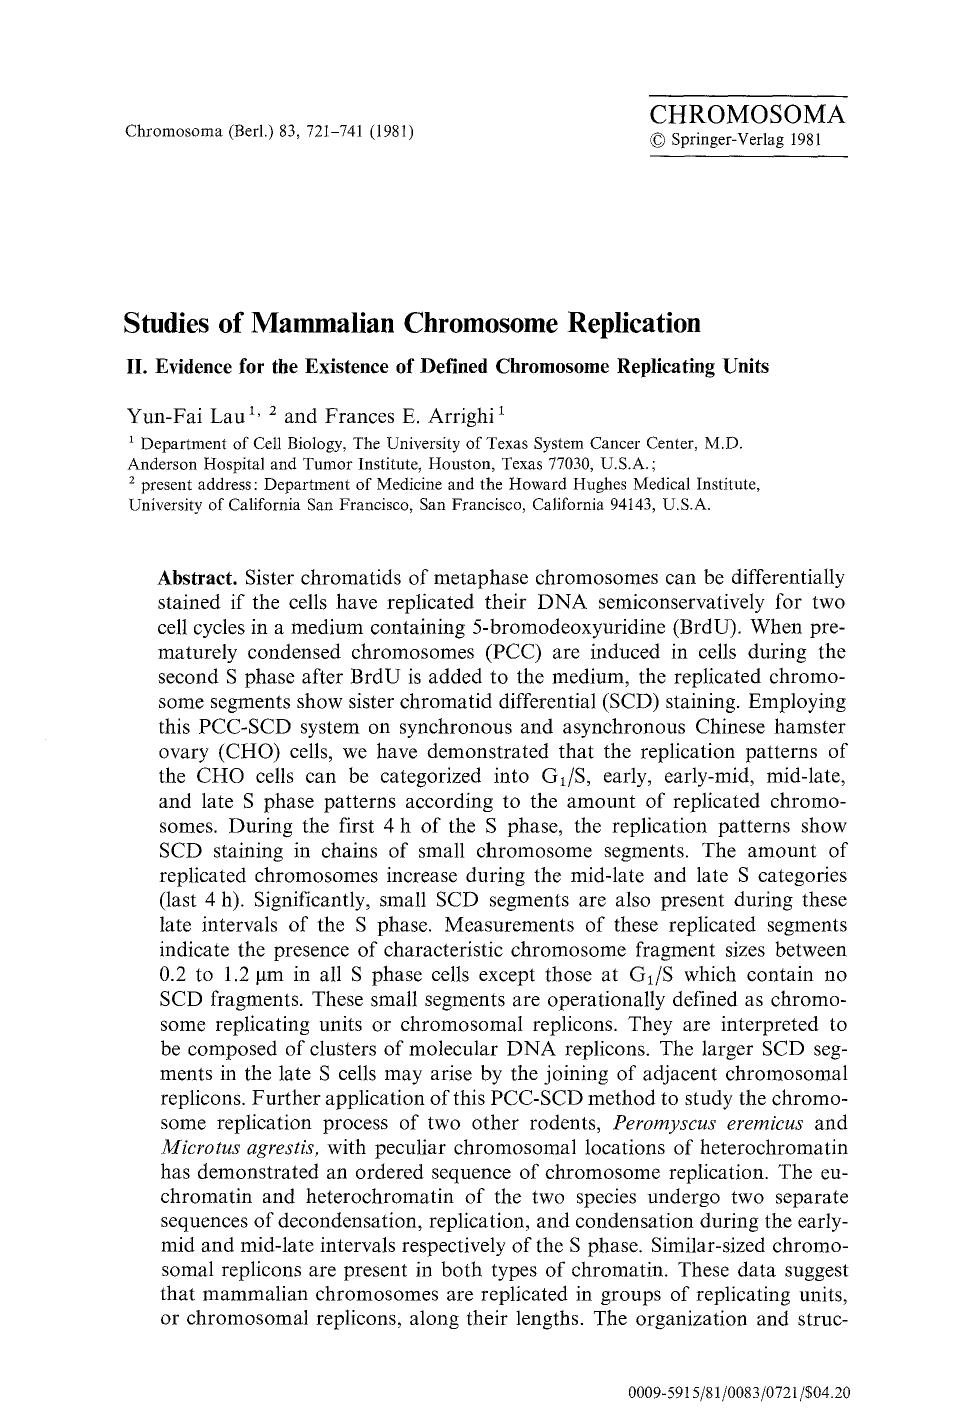 Studies of mammalian chromosome replication by Unknown